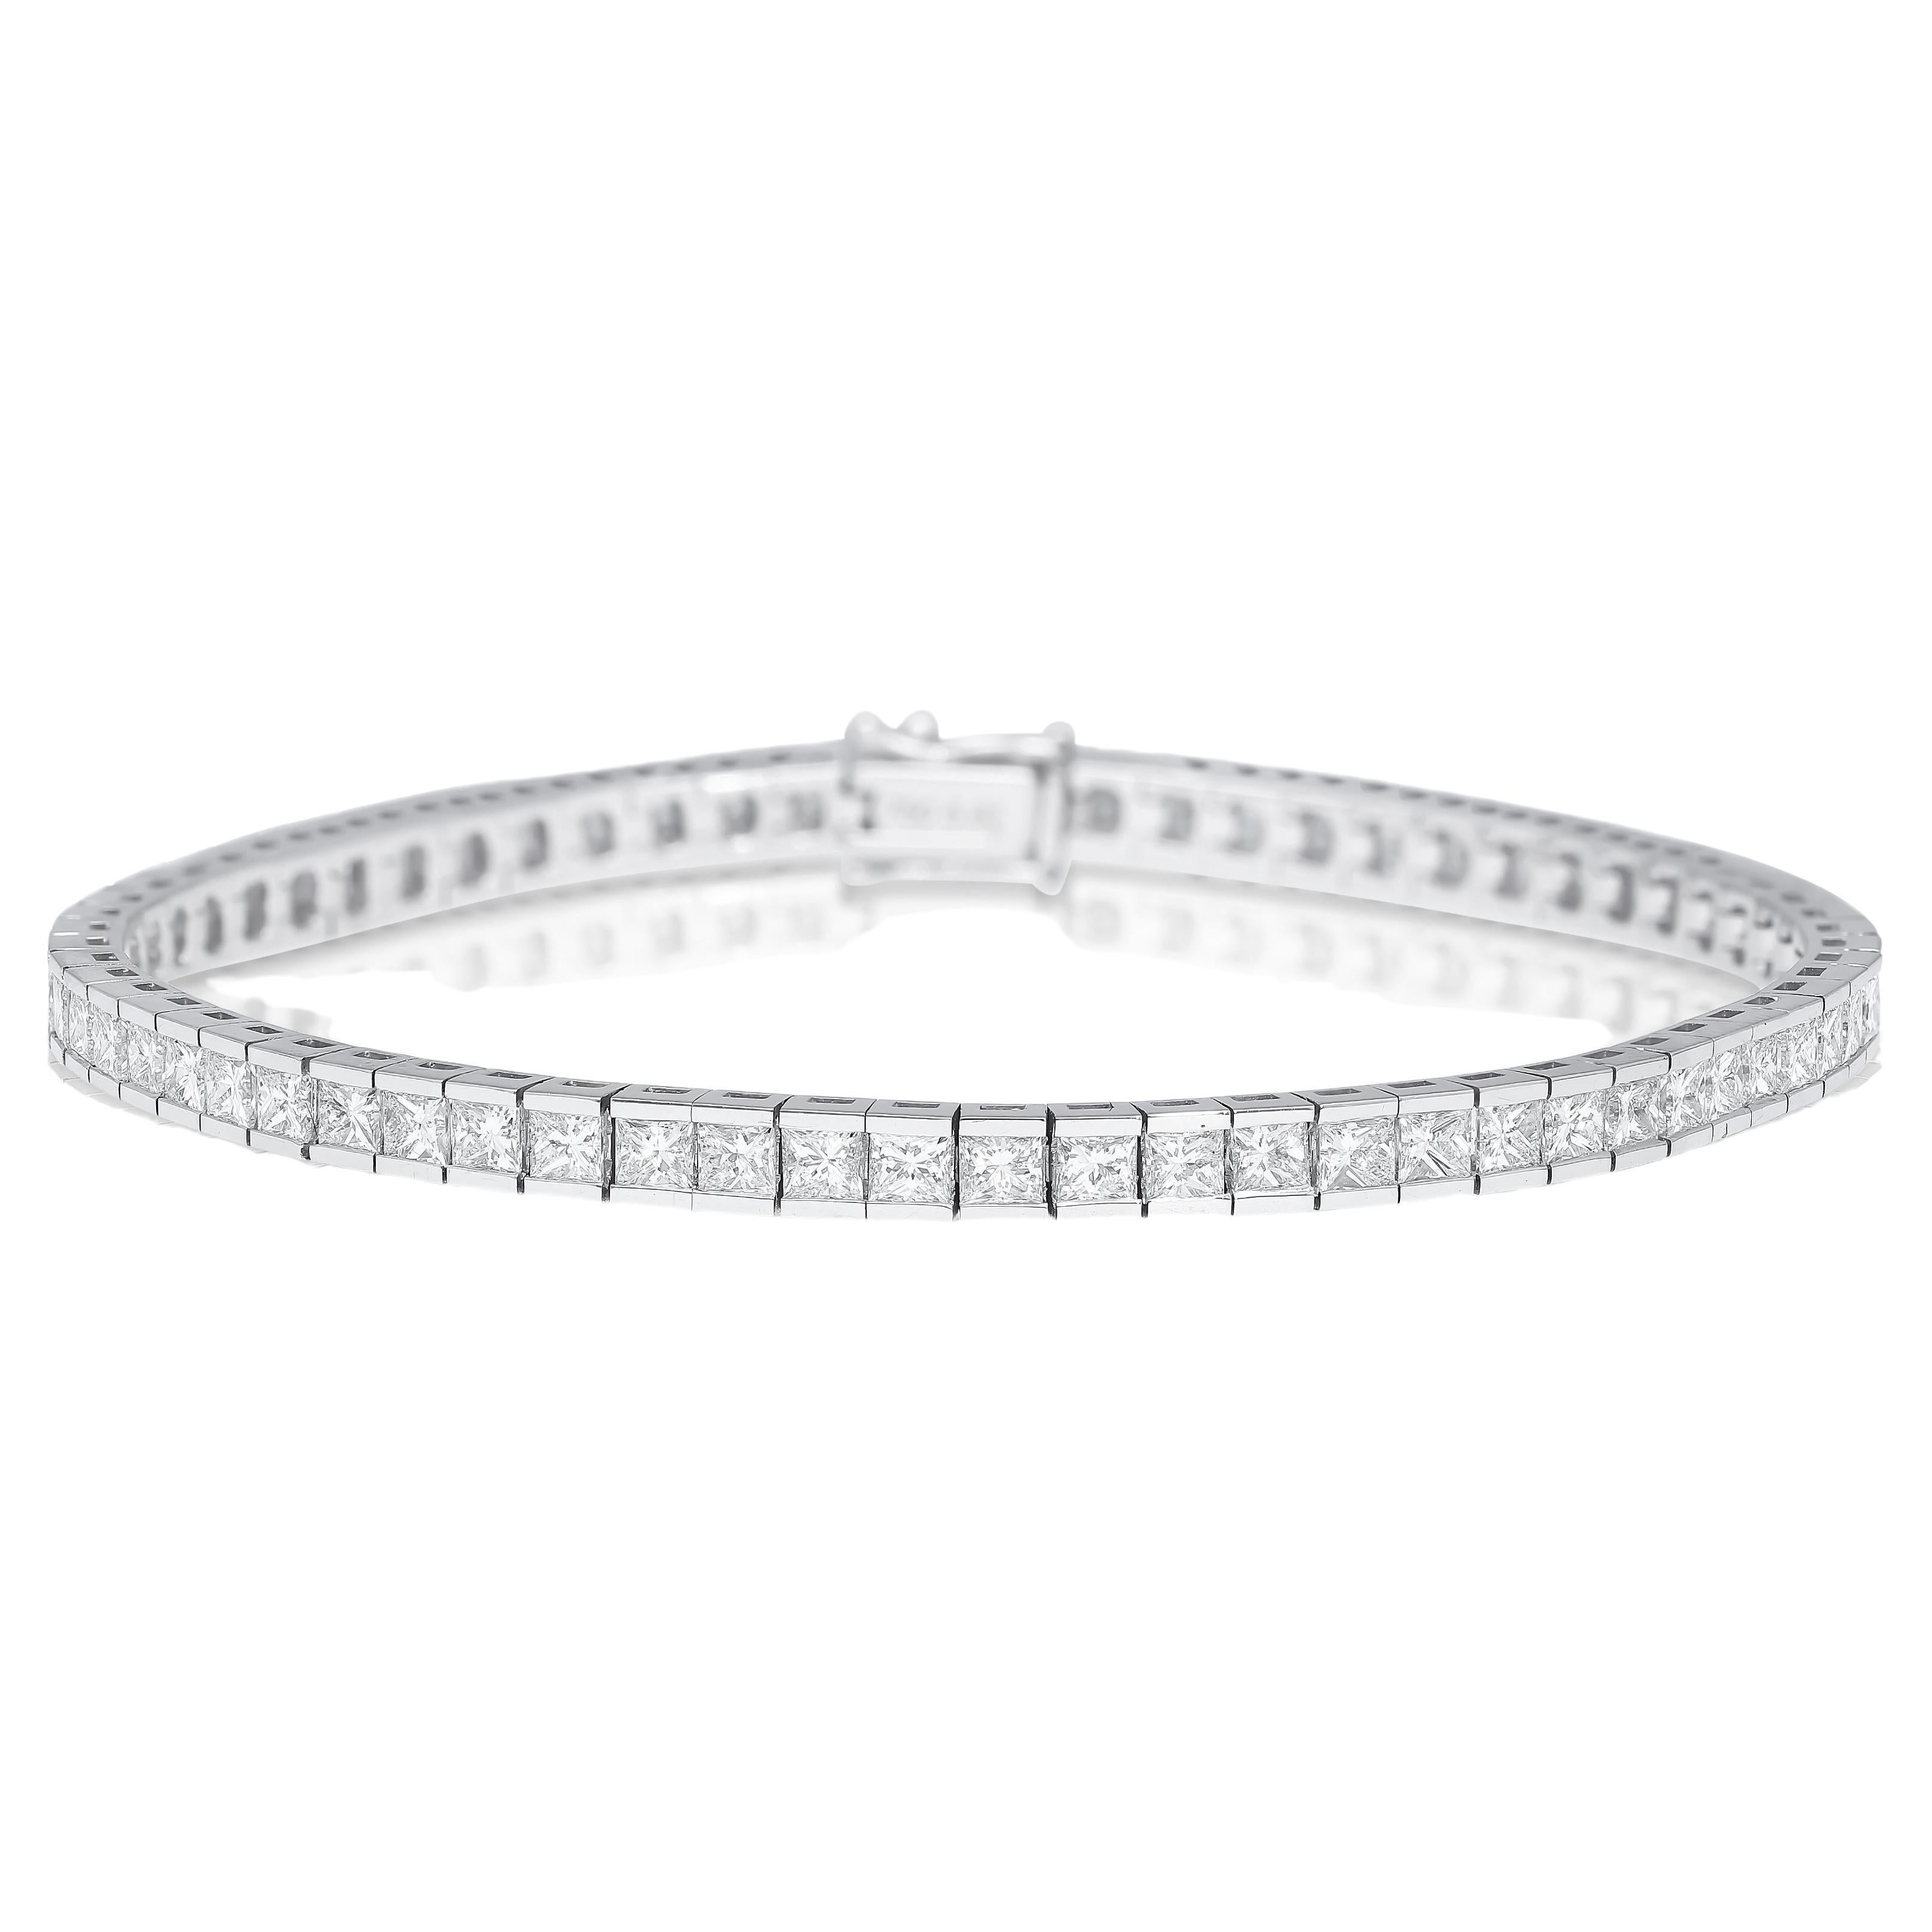 4.7 Carat Princess Cut Diamond Half Bezel Tennis Bracelet in 18K White Gold 7" For Sale